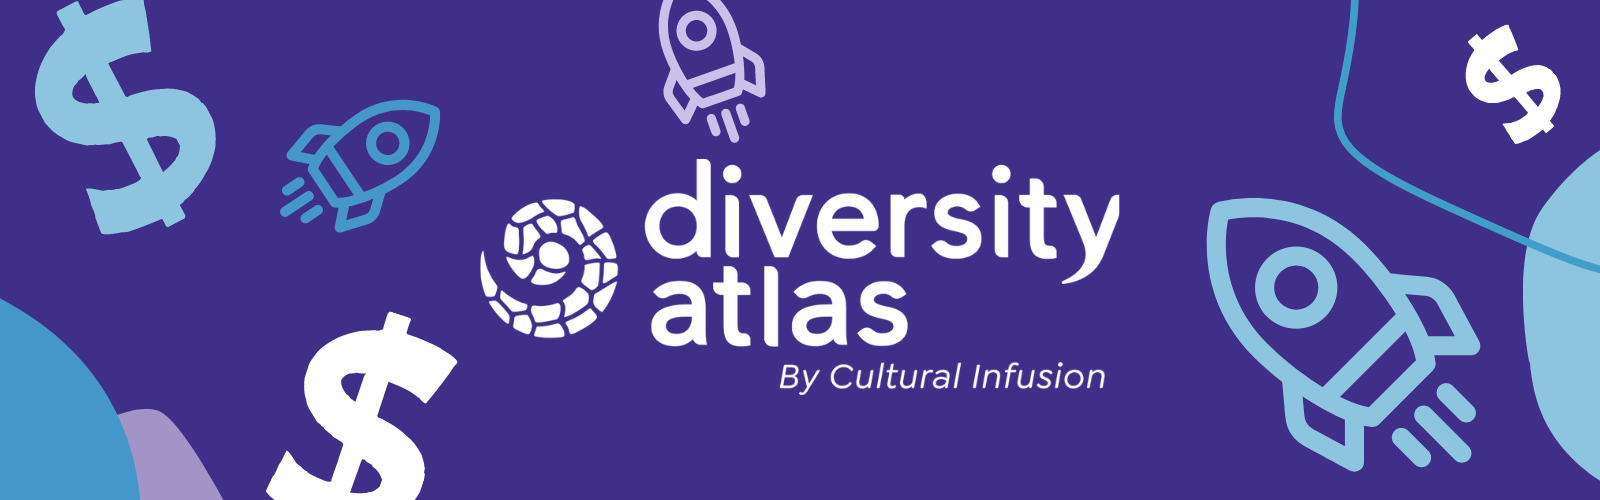 Featured image for “Diversity Atlas Secure $AUS 6 Million in Bridge Funding”